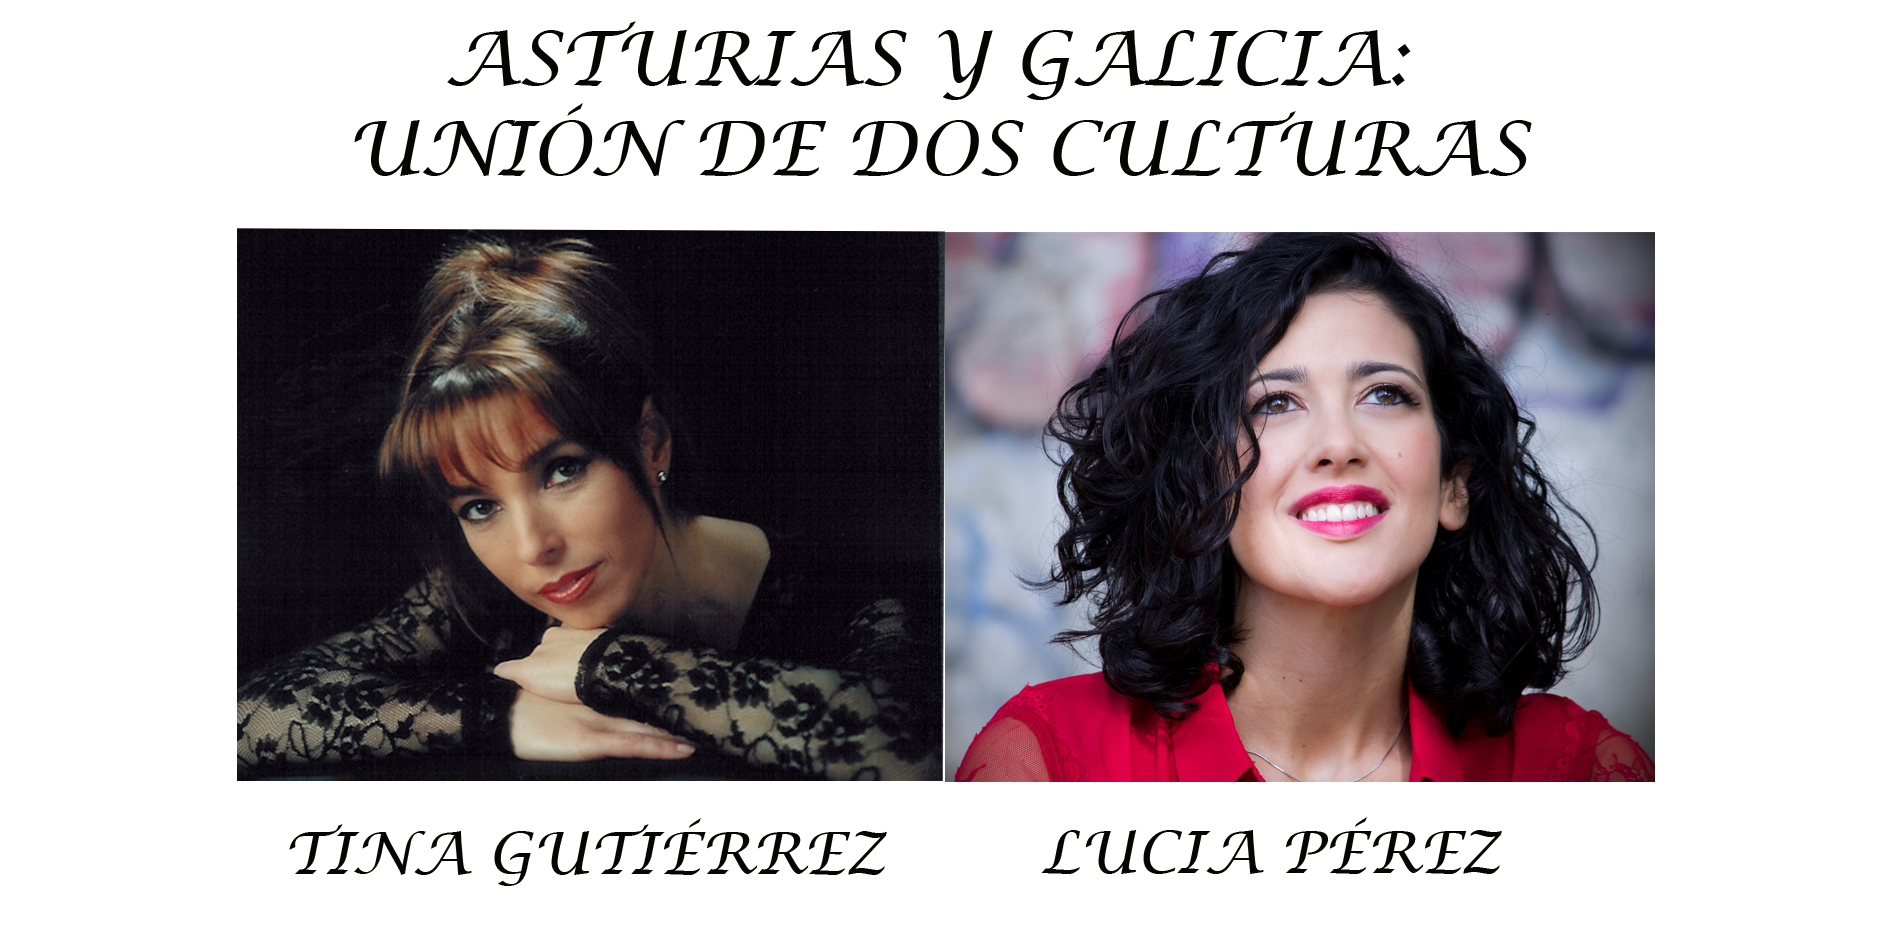 Tina Gutierrez Unnion Dos Culturas Concierto Mieres